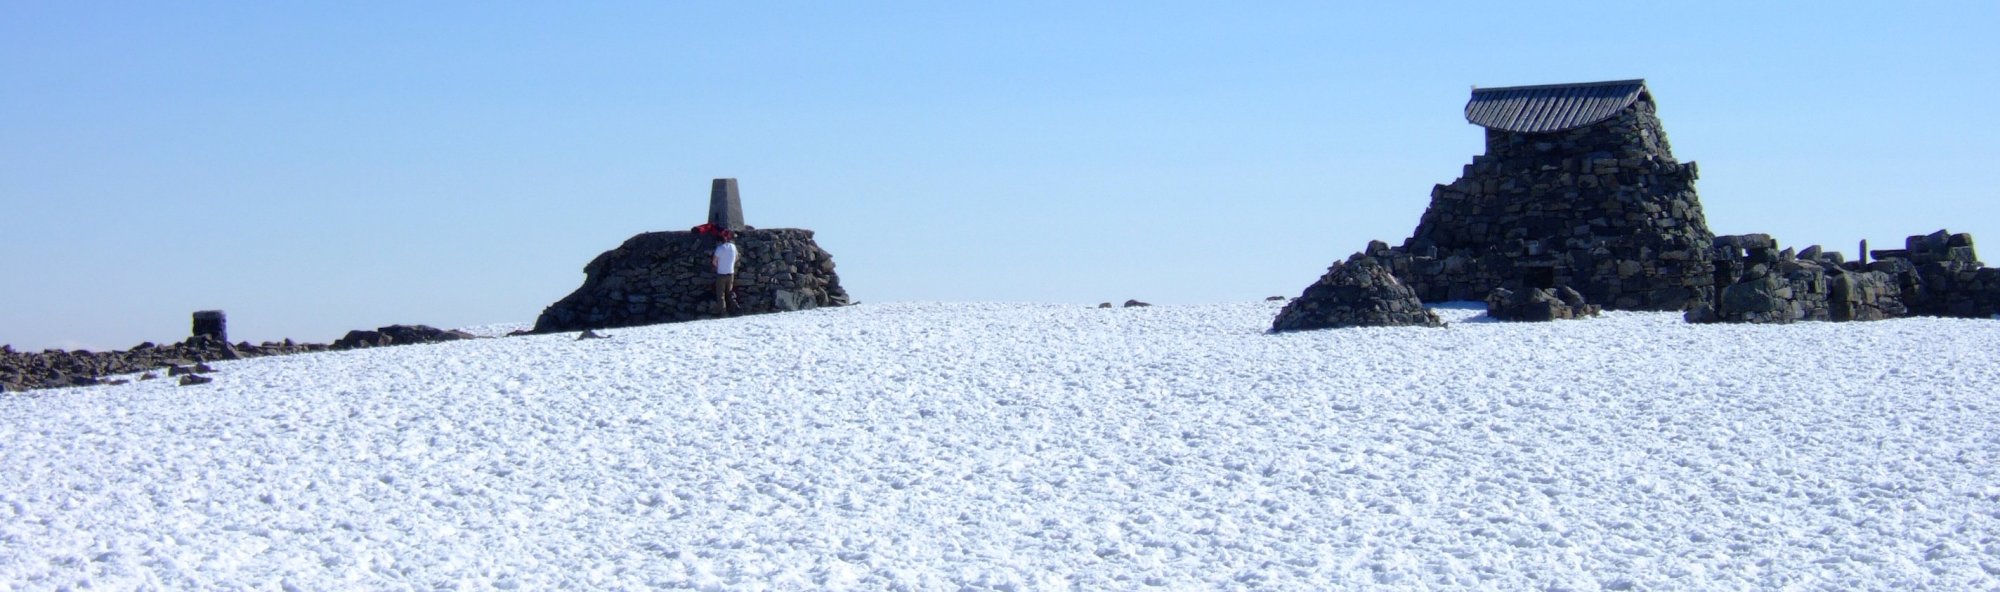 The summit structures on Ben Nevis